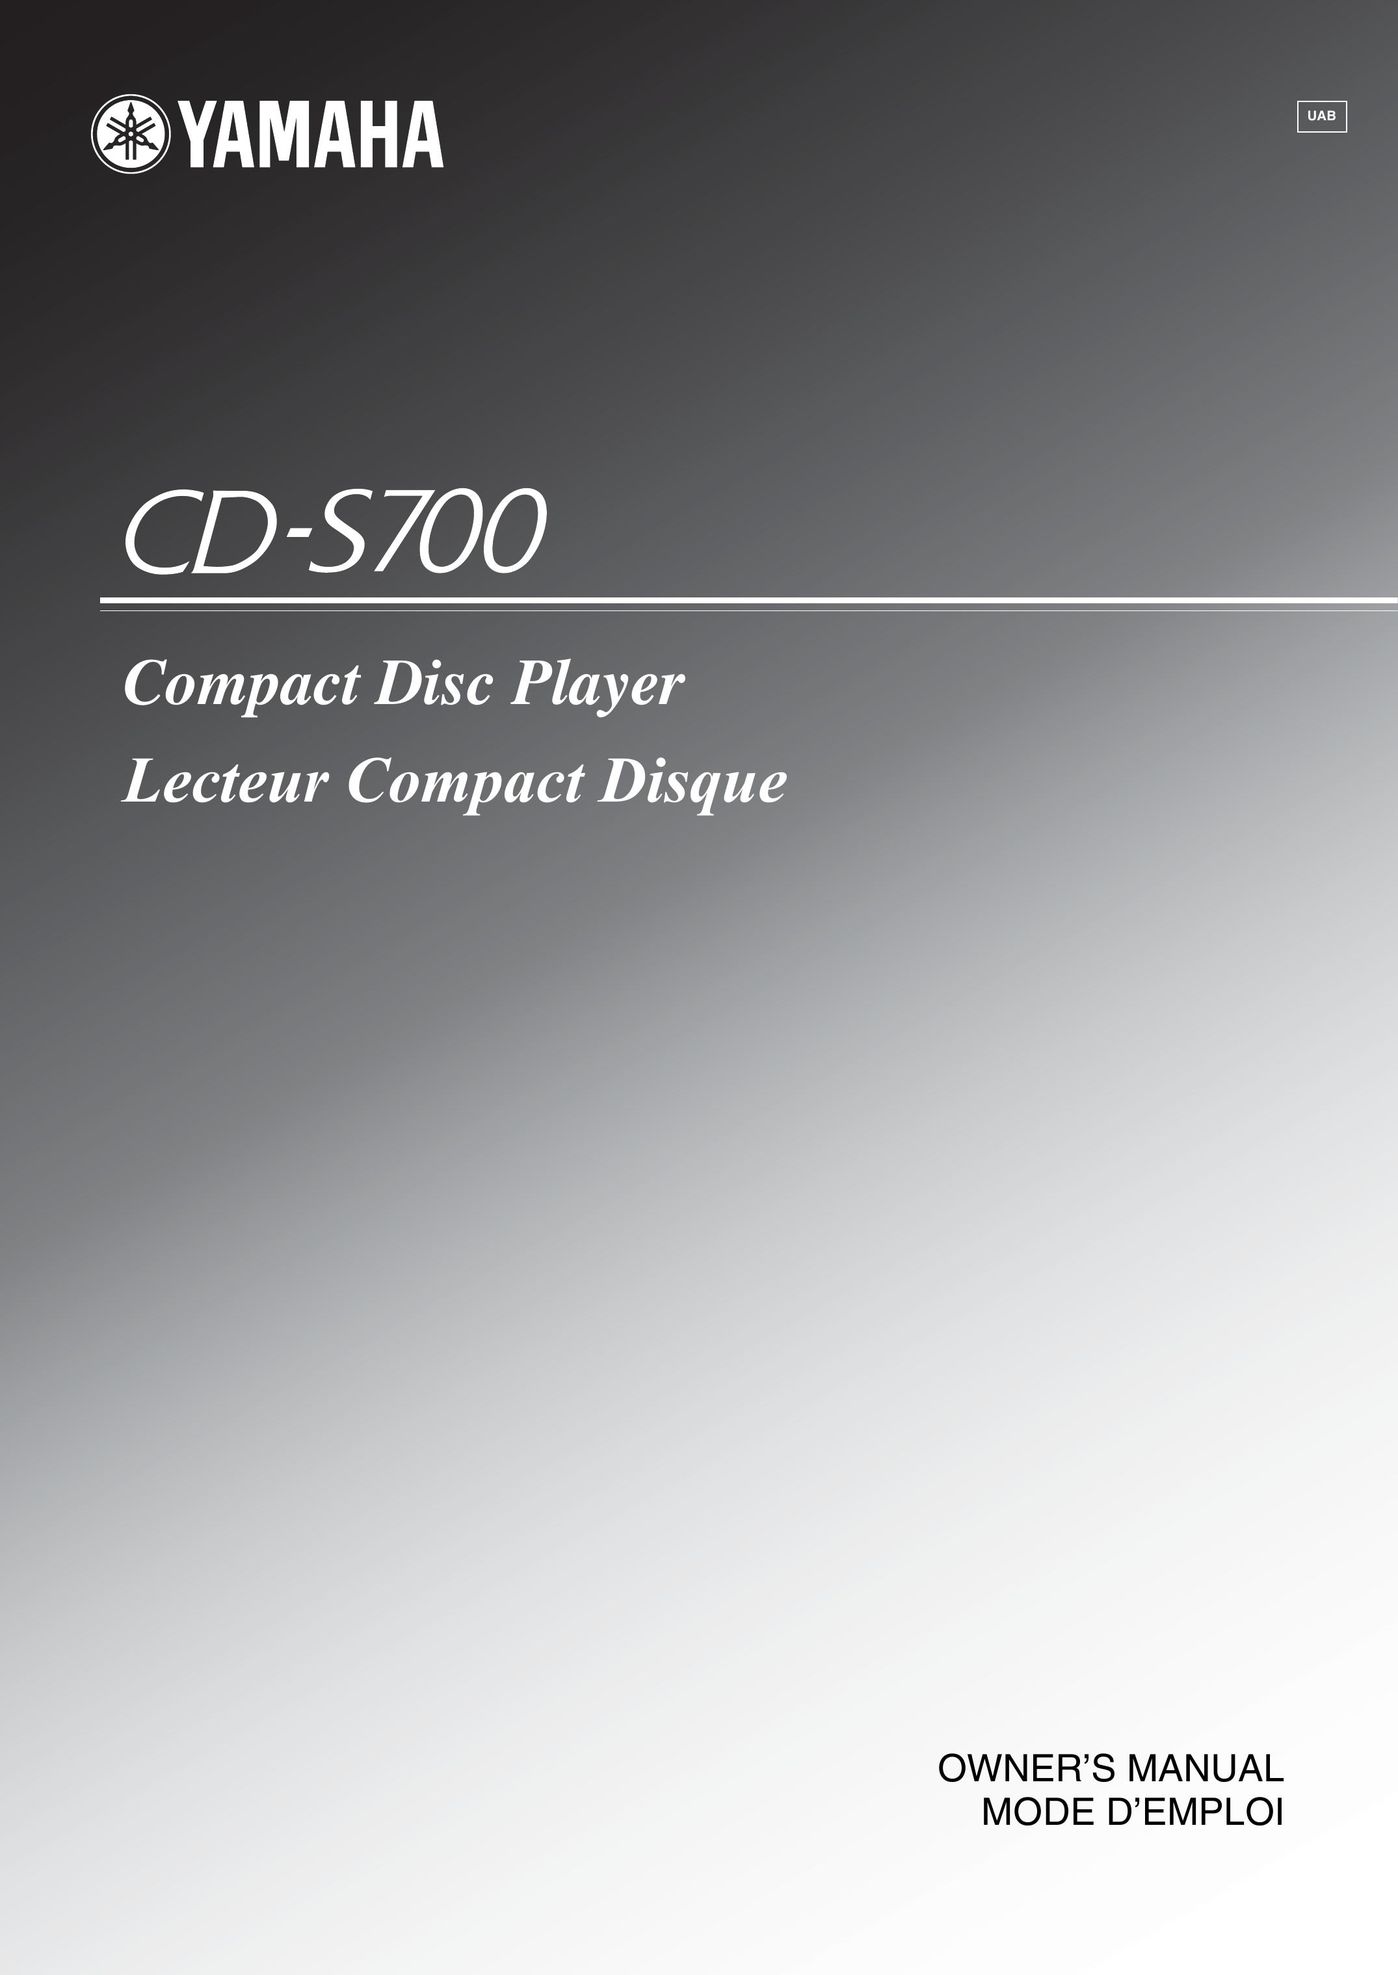 Yamaha CD-S700 Car Stereo System User Manual